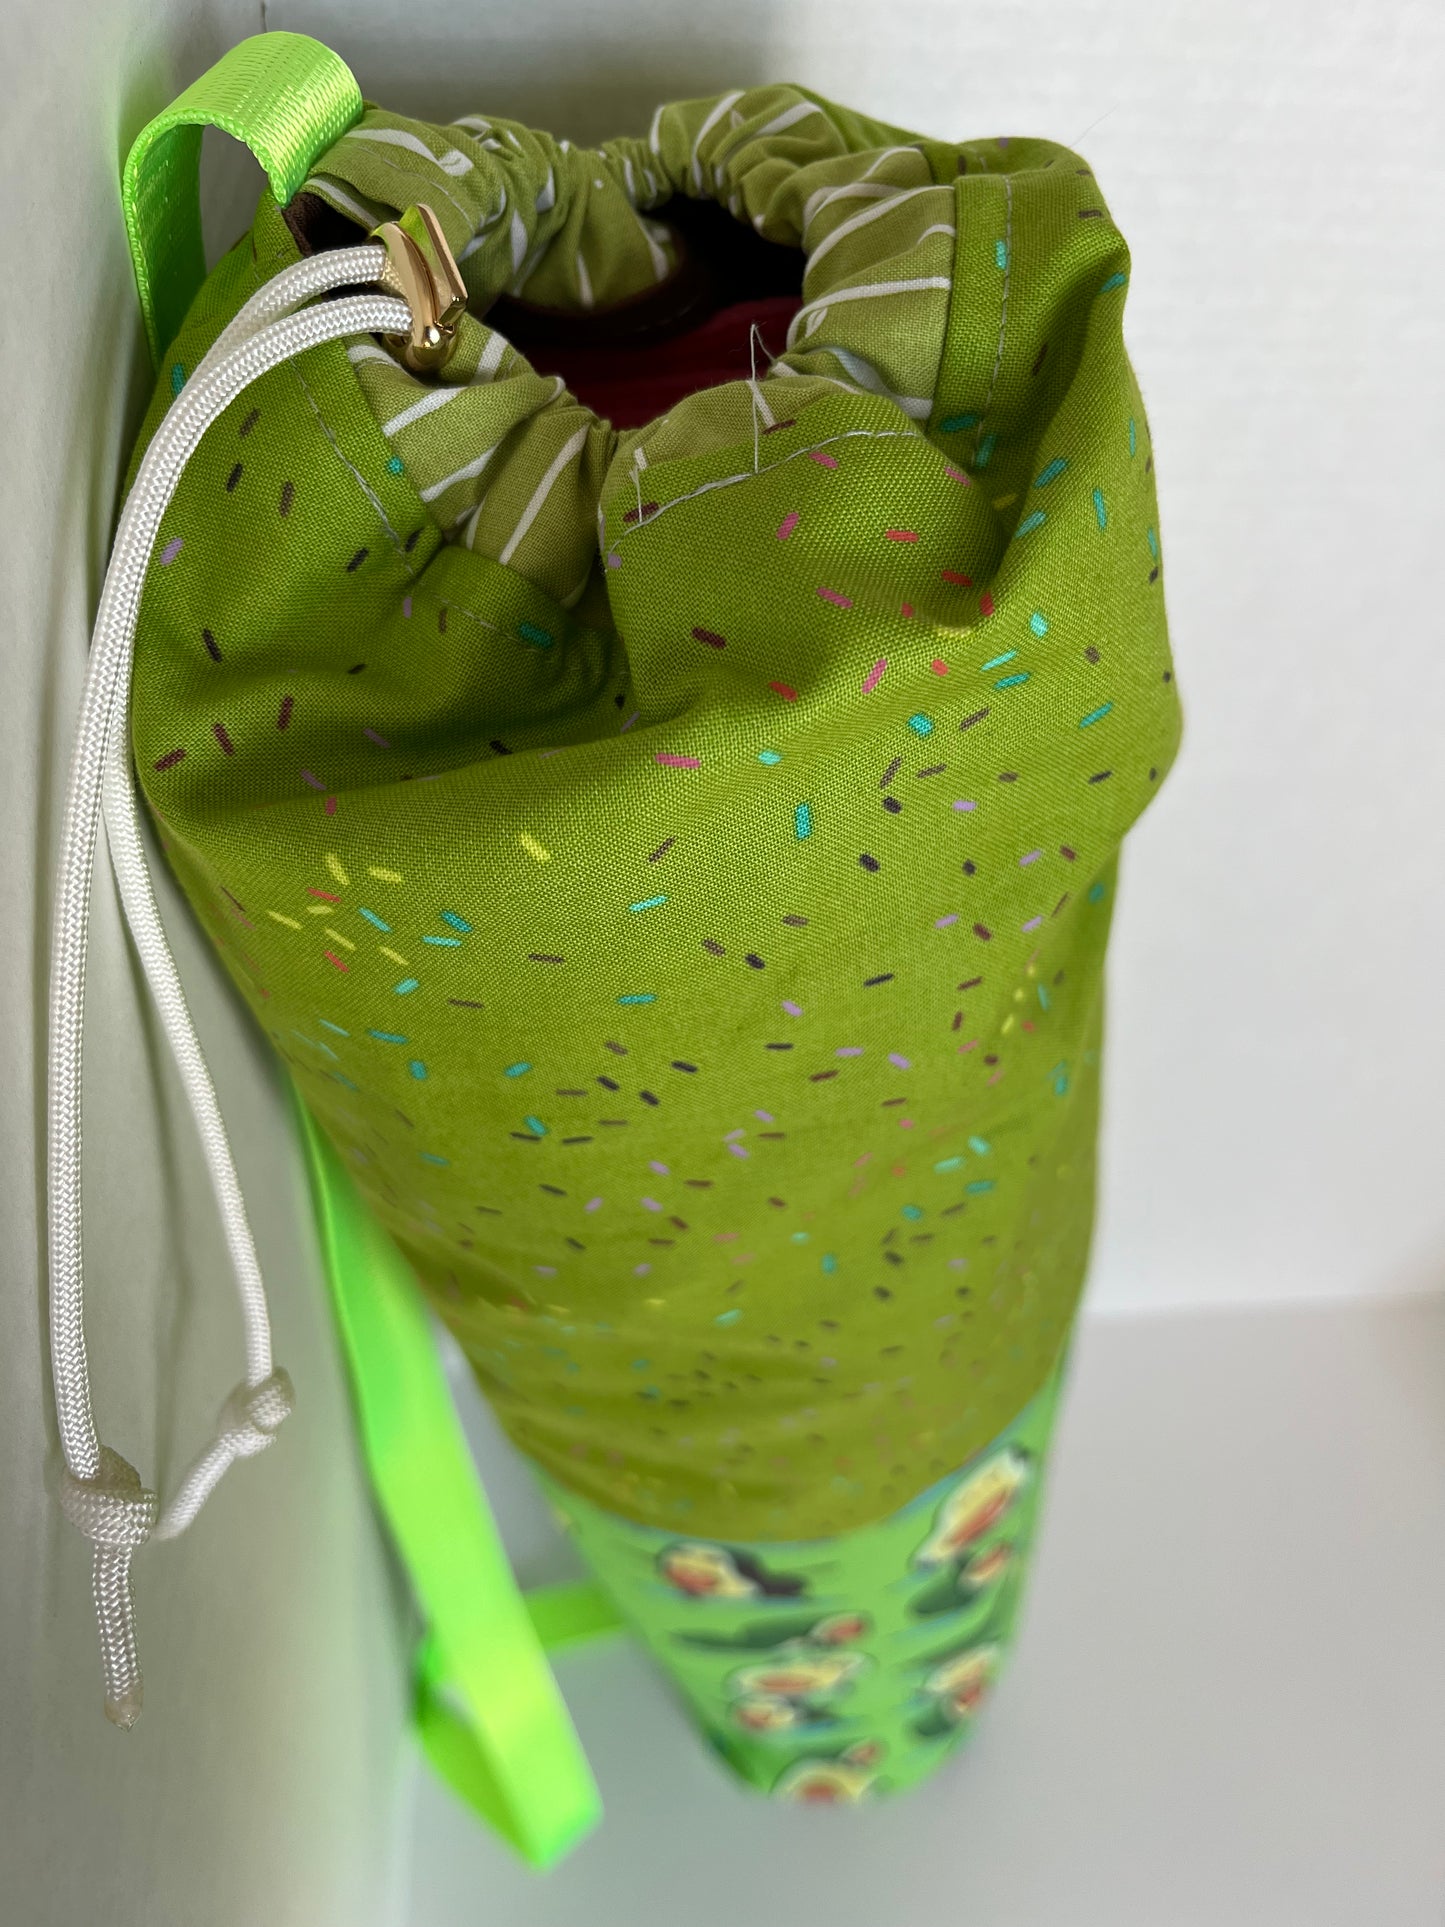 Avocados Yoga Mat Bag, Green Avocado Themed Yoga Bag